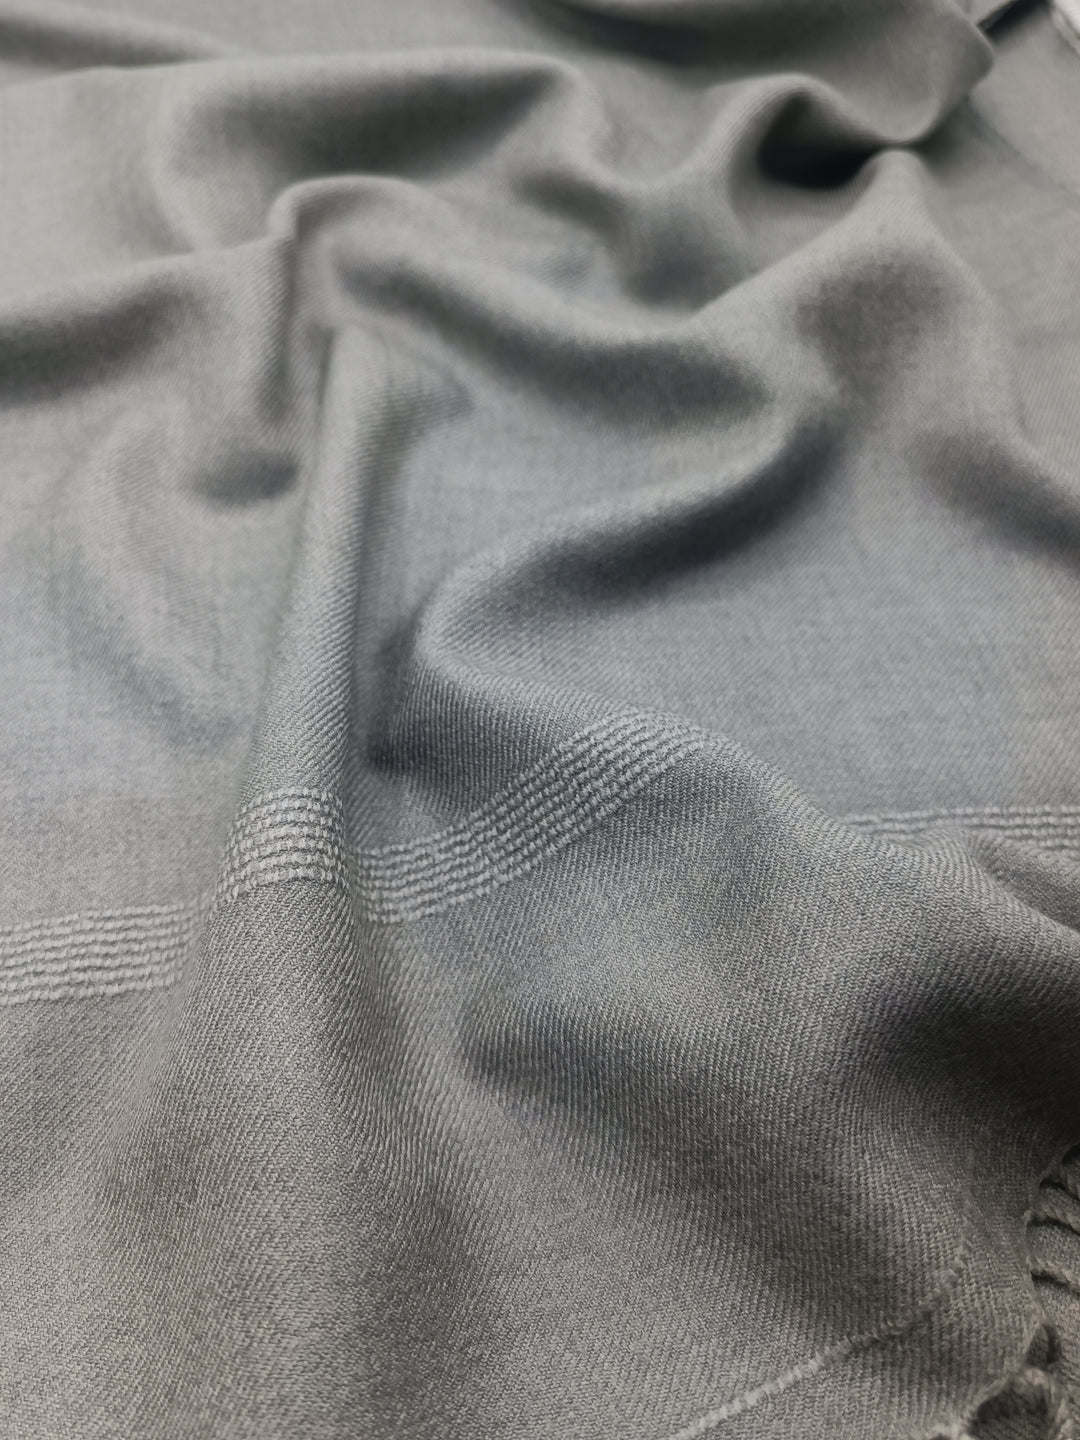 Premium Quality Light Gray Pure Woolen Shawl